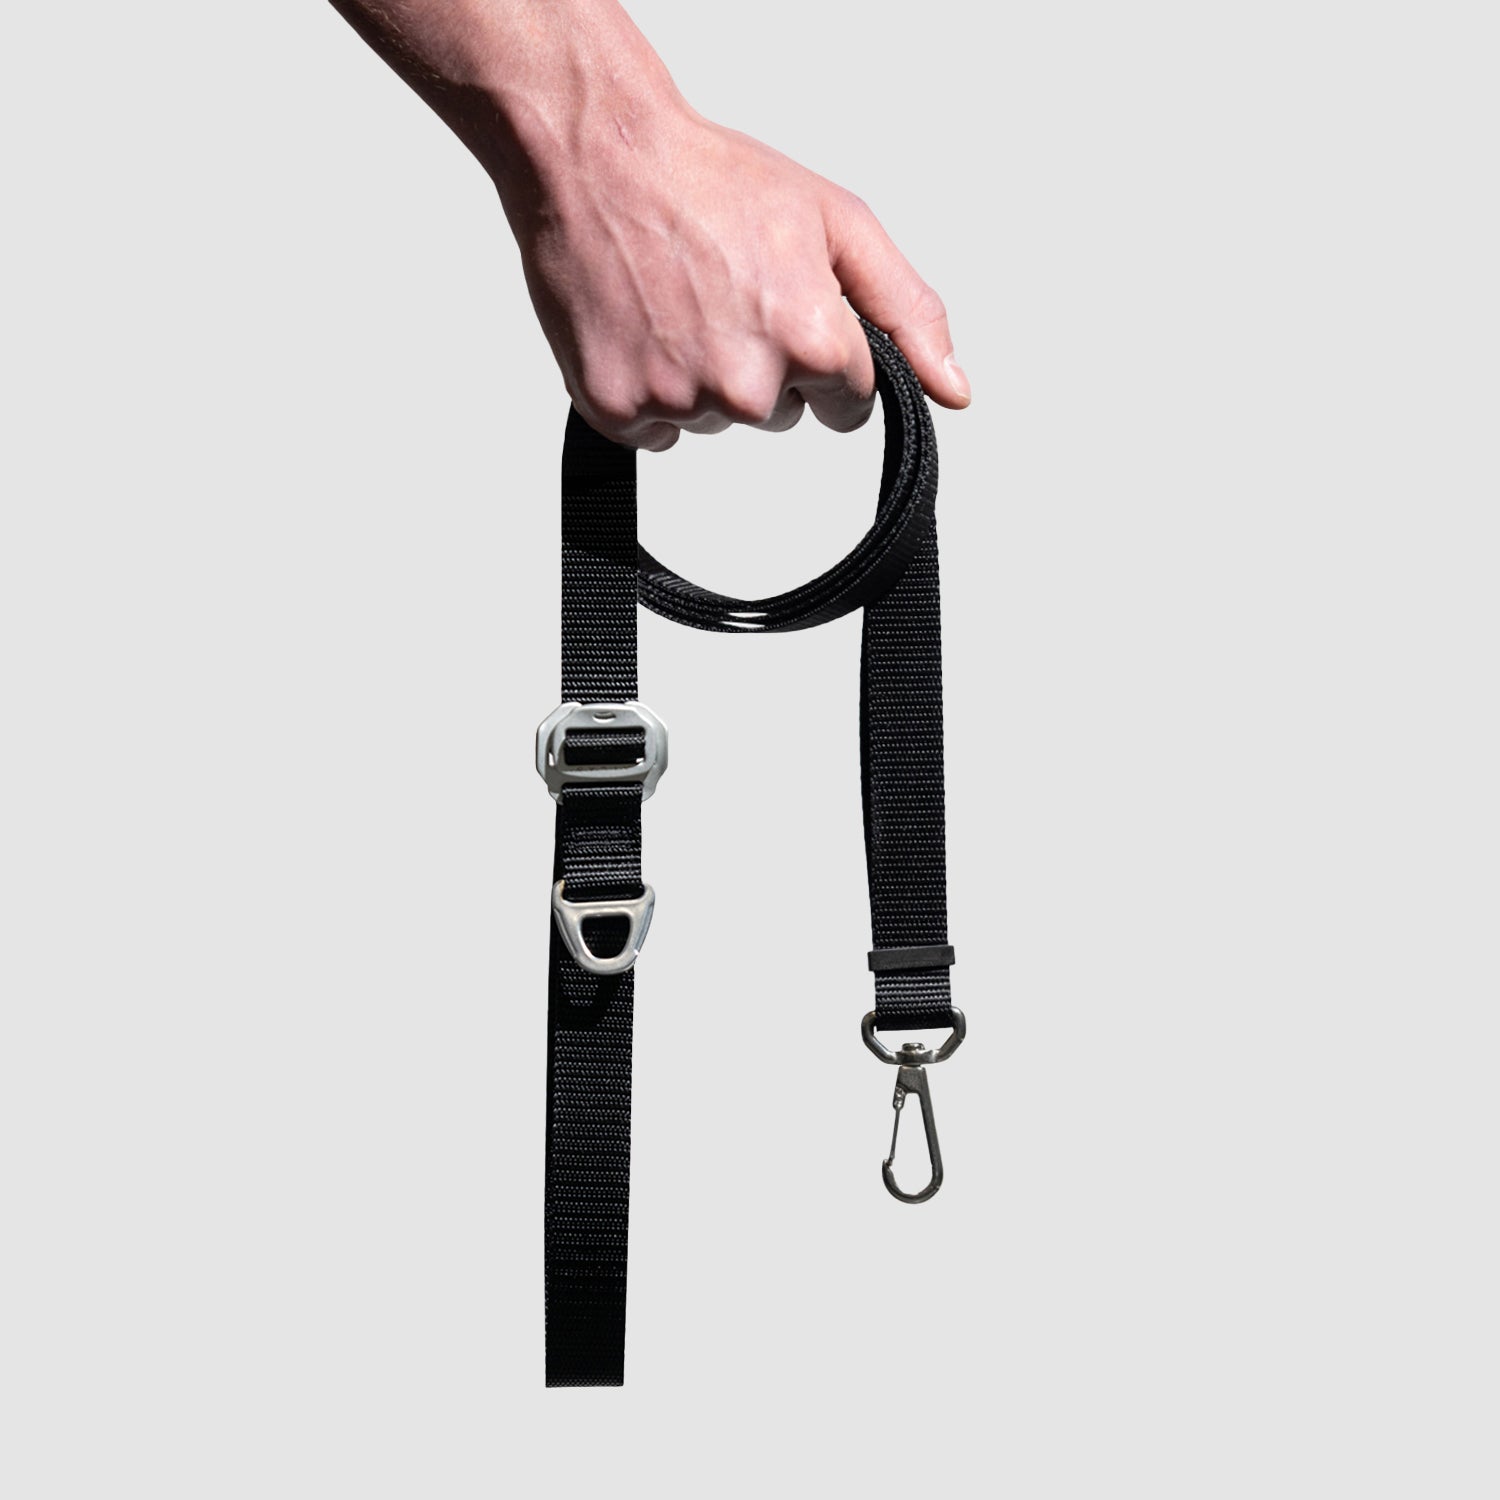 lifetime lite adjustable leash for active dogs handmade in colorado by atlas pet company --black